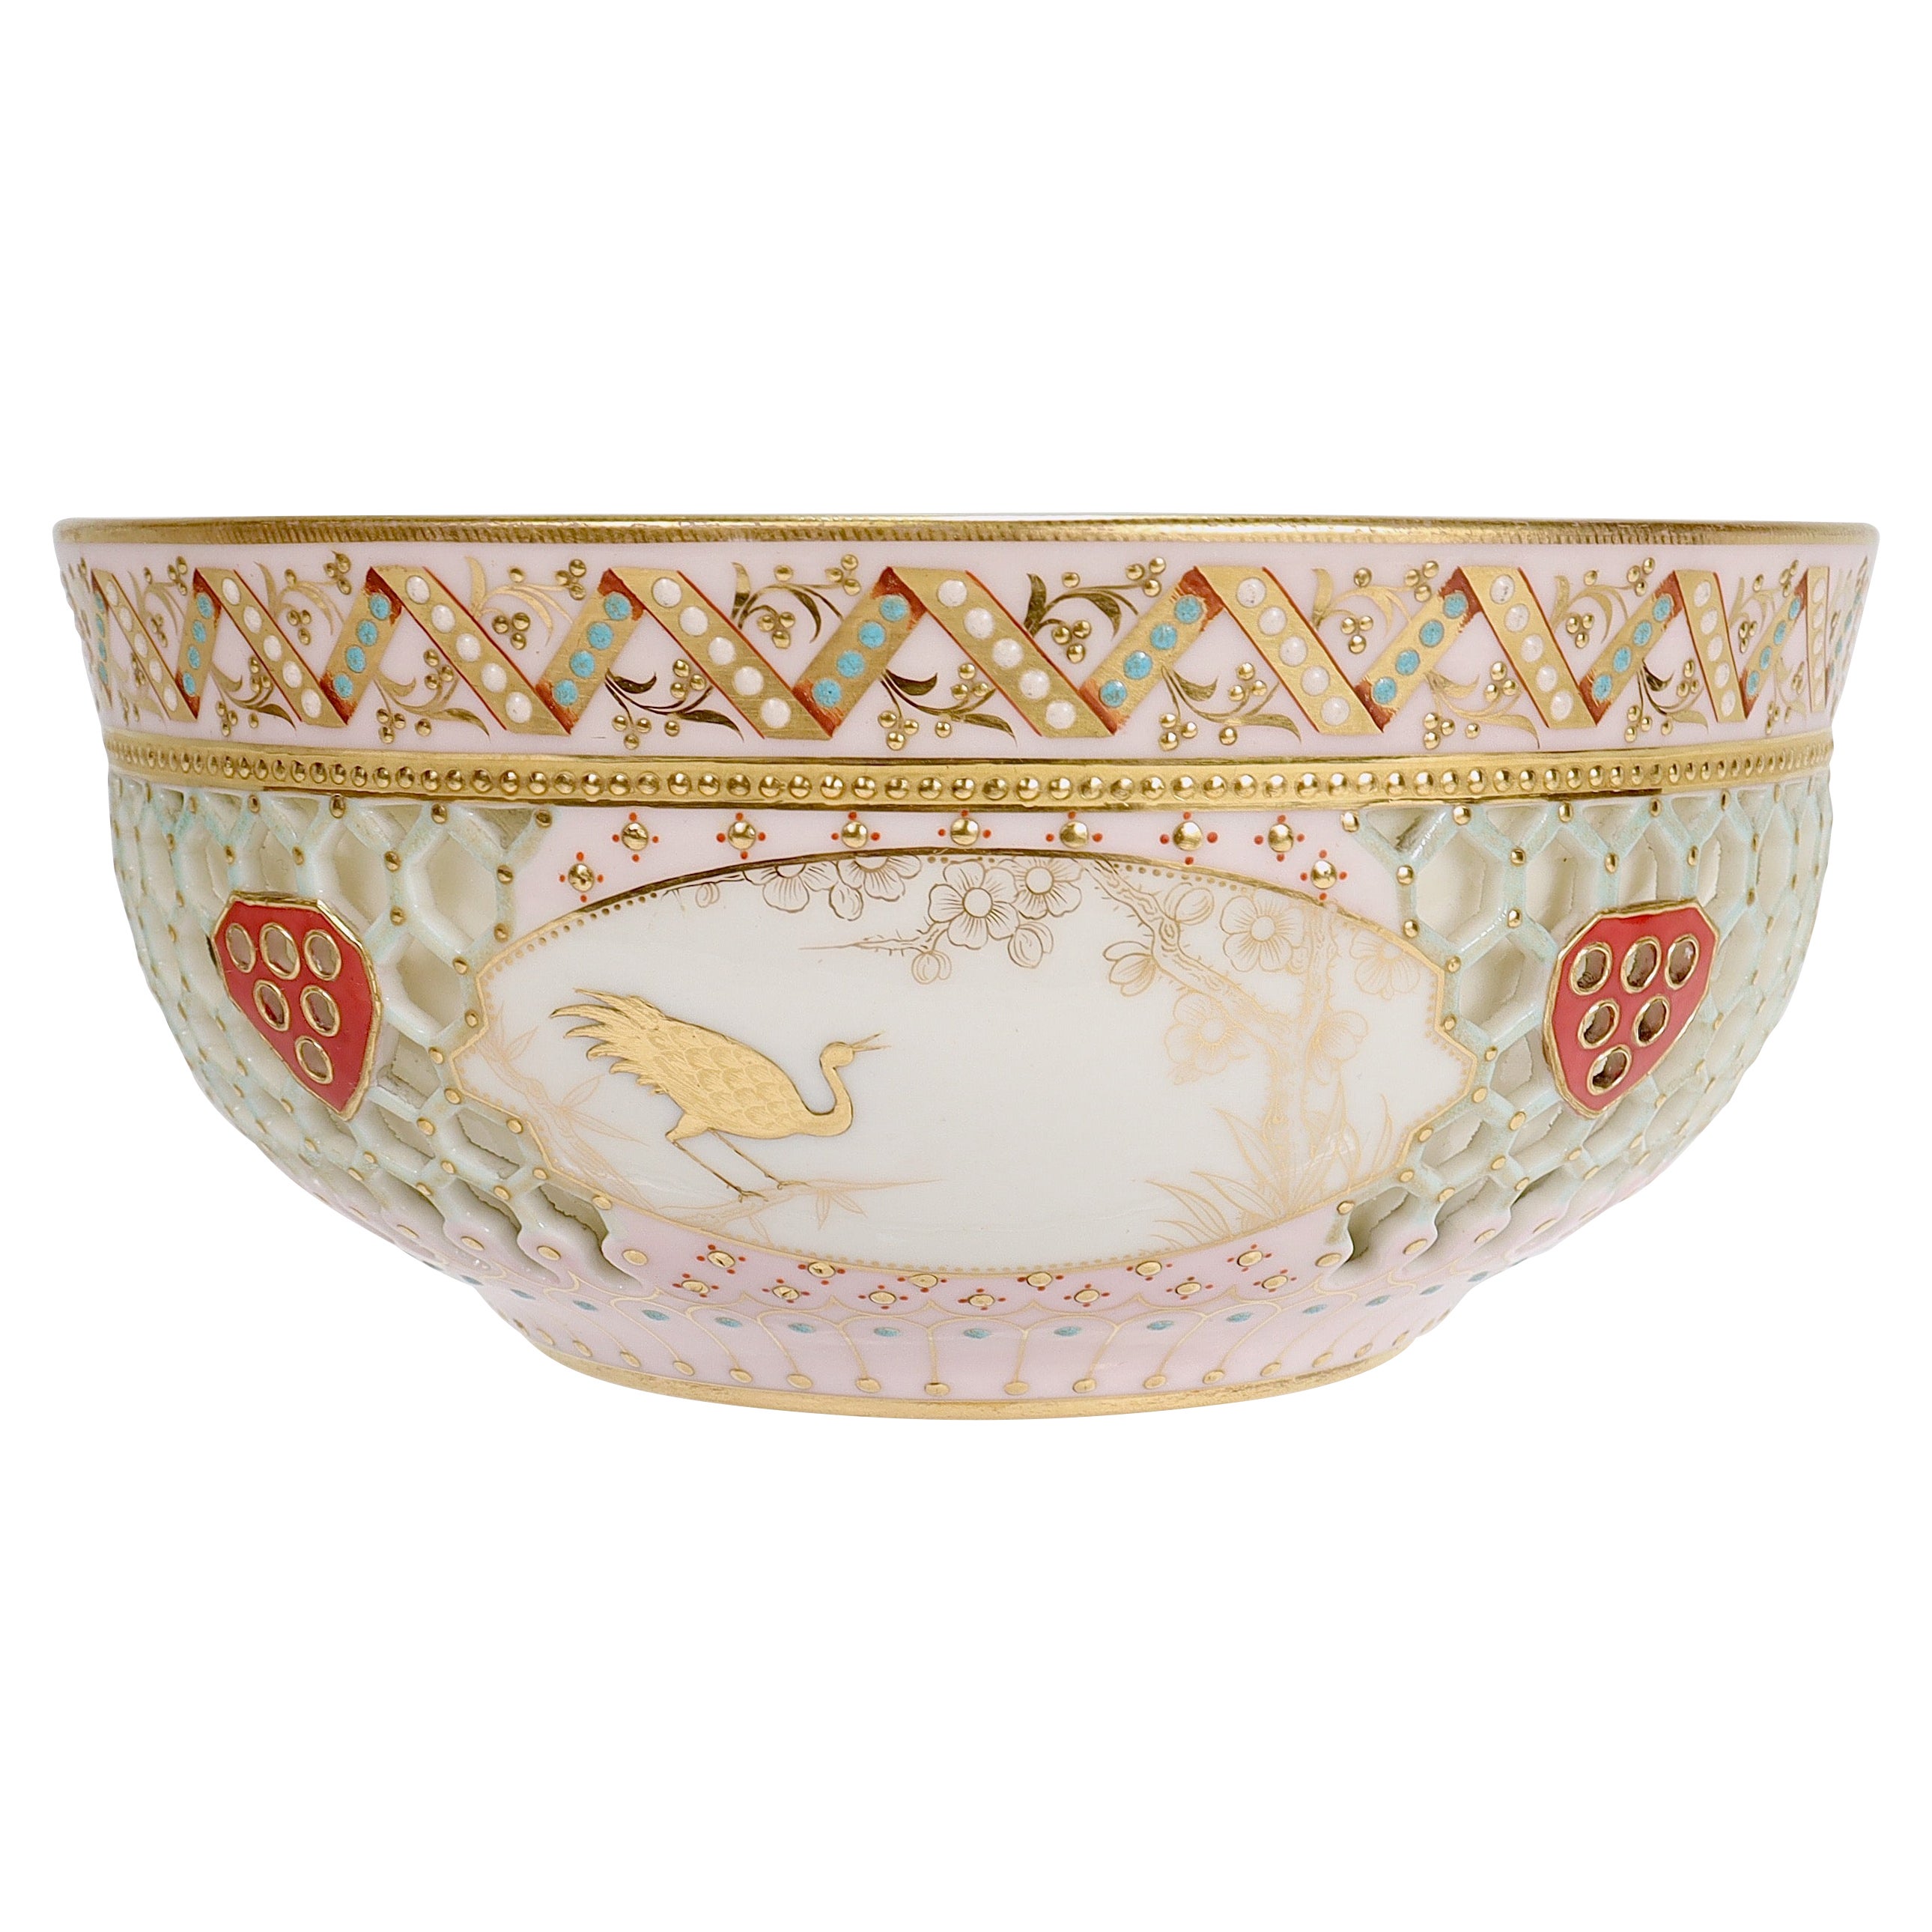 Reticulated Royal Worcester Porcelain Bowl Attr. to George Owen & Samuel Ranford